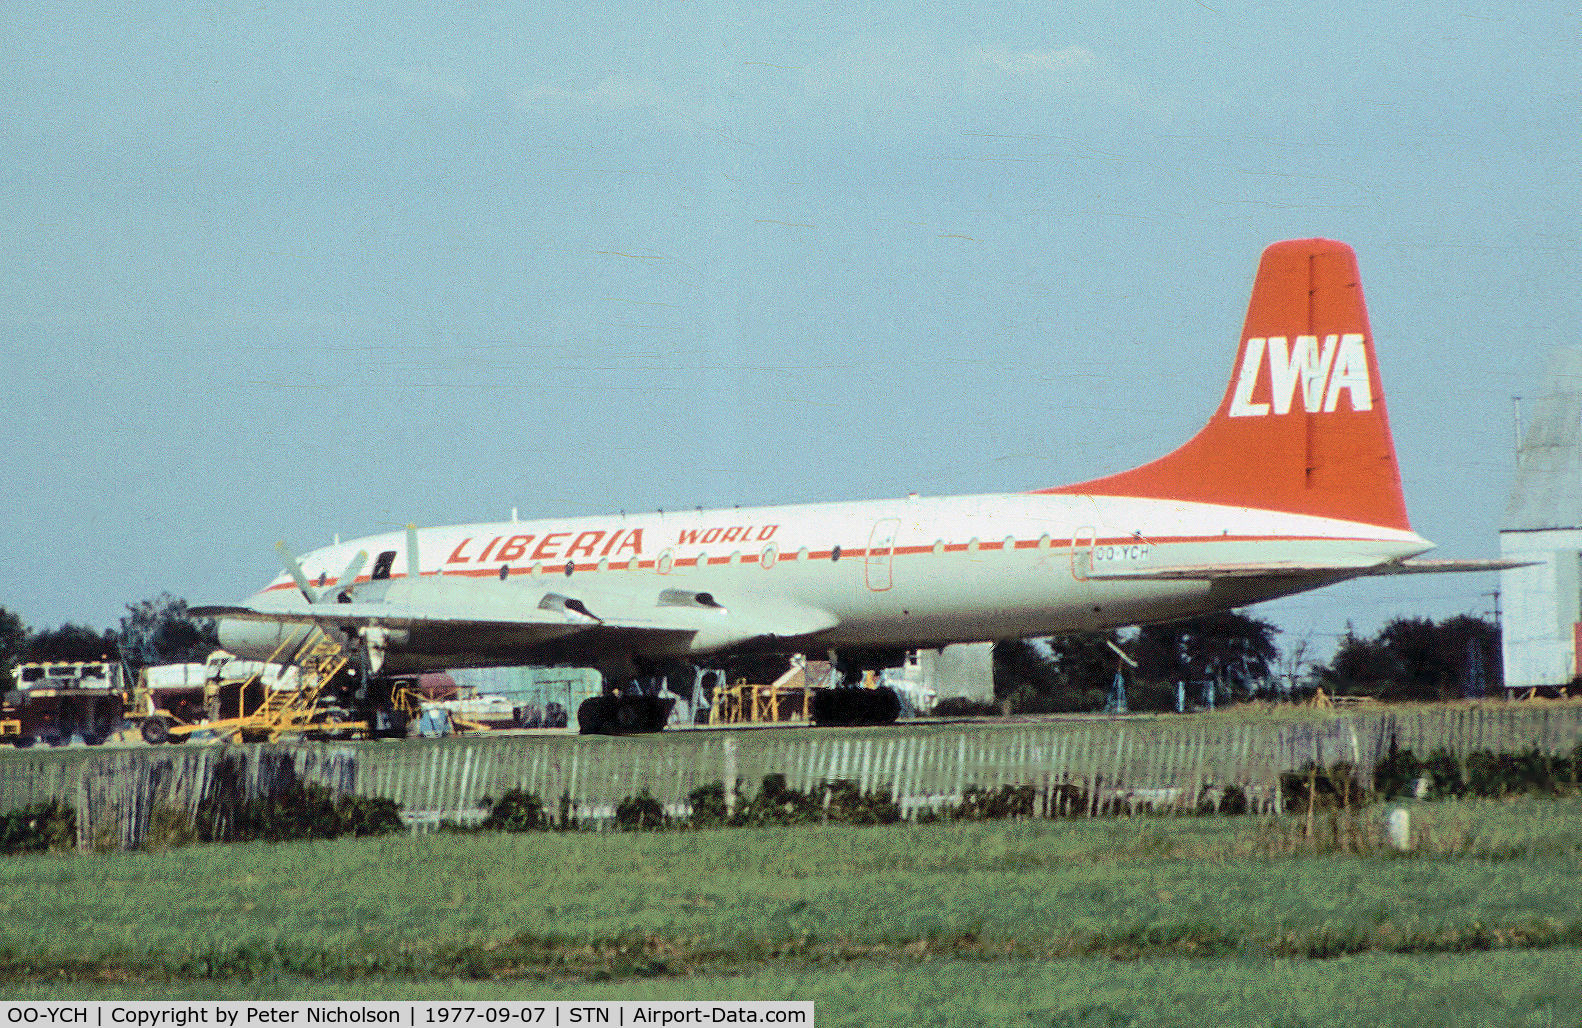 OO-YCH, 1959 Bristol Britannia C.1 (175 Britannia 253F) C/N 13399, Britannia 253 of Liberia World as seen at Stansted in the Summer of 1977.